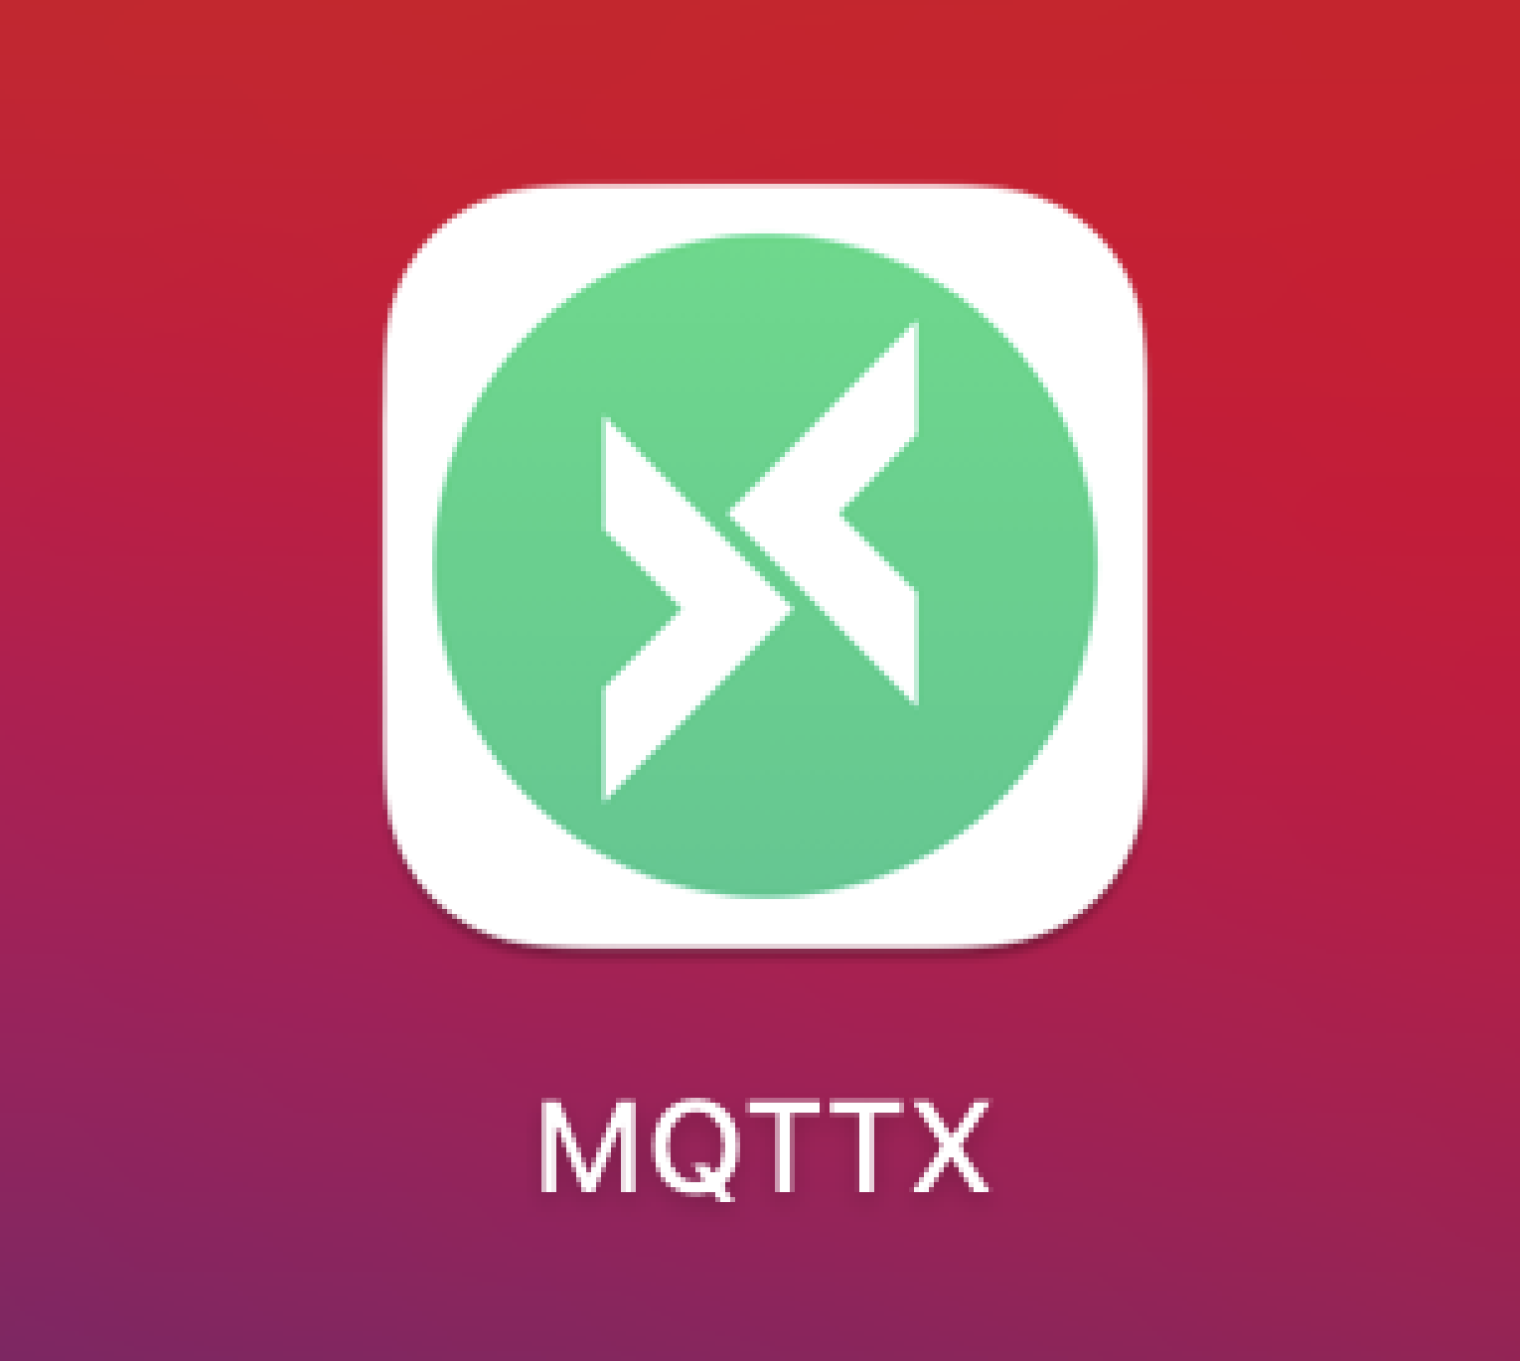 MQTT X 新 logo